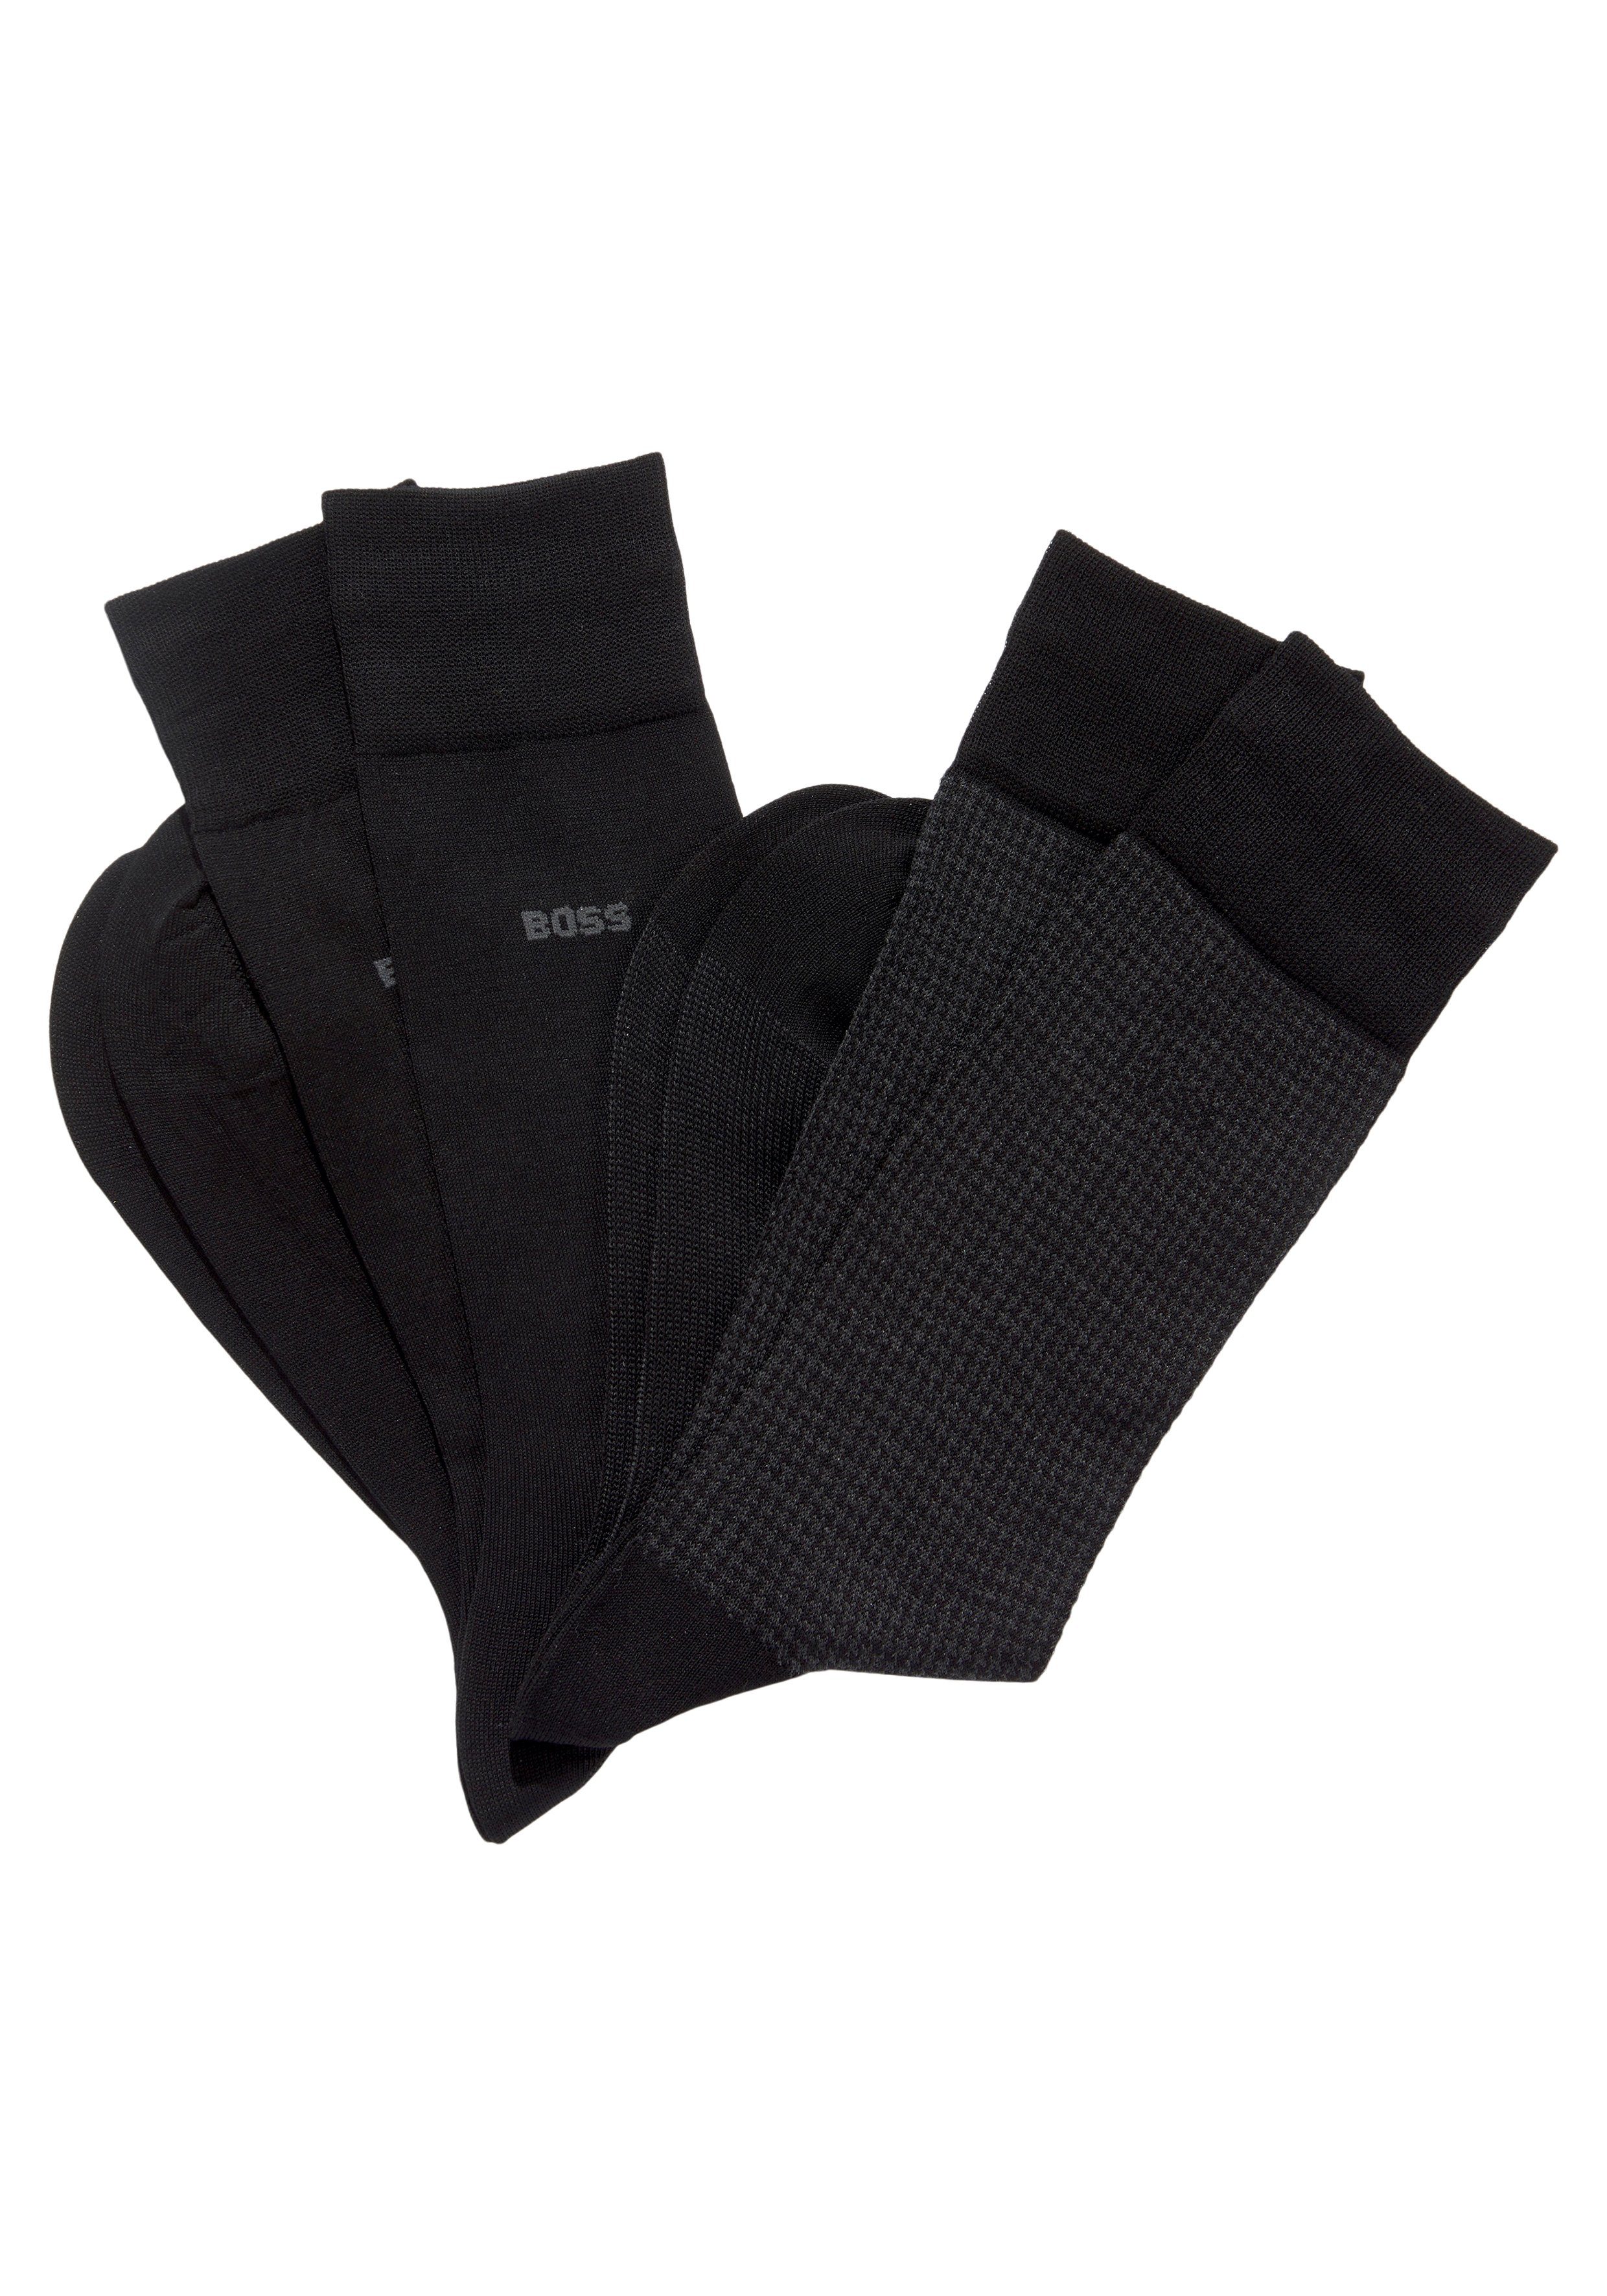 BOSS Socken 2P Houndstooth MC (Packung, 2-Paar, 2er Pack) mit eingesticktem Markenlogo Black | Socken